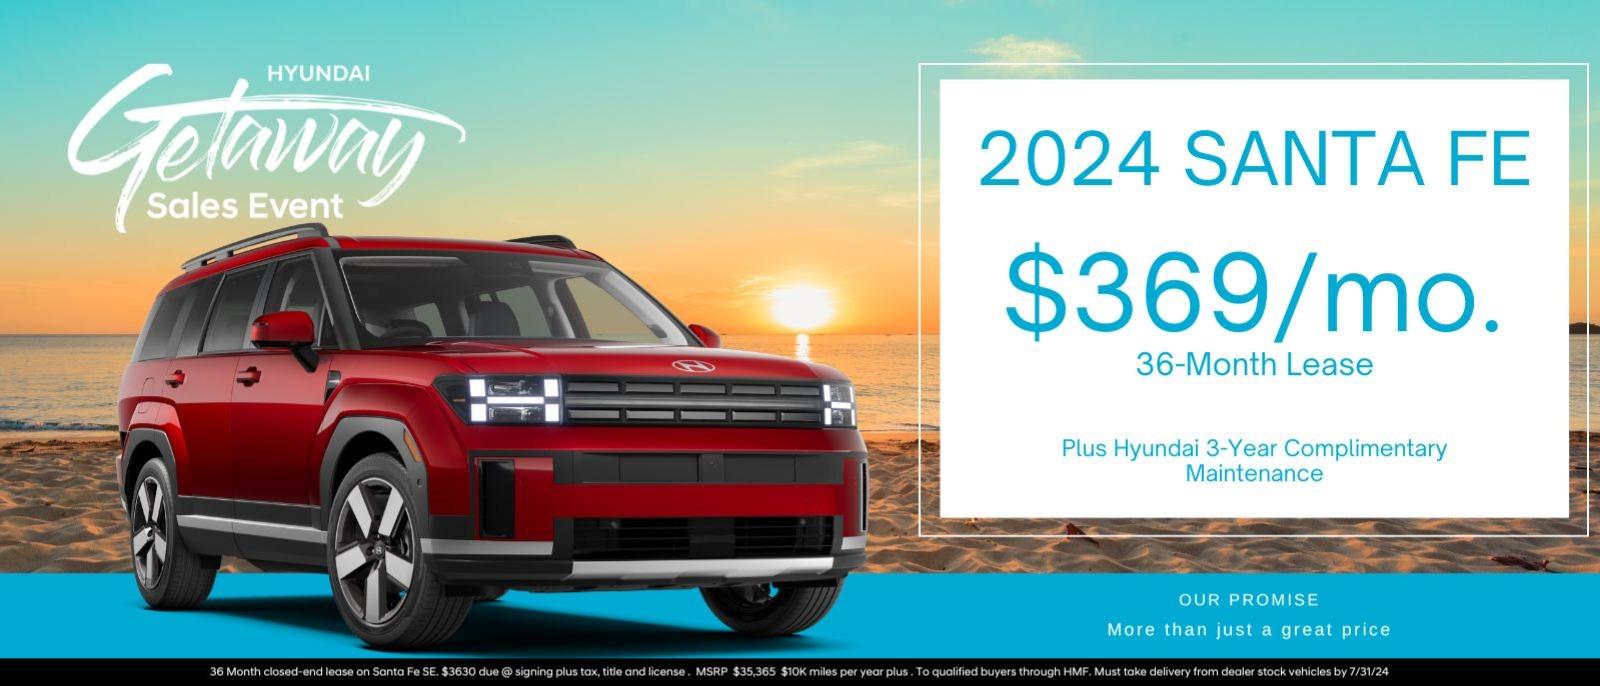 2024 Santa Fe 
$369/m. 36-Month Lease
Plus Hyundai 3-Year Complimentary Maintenance